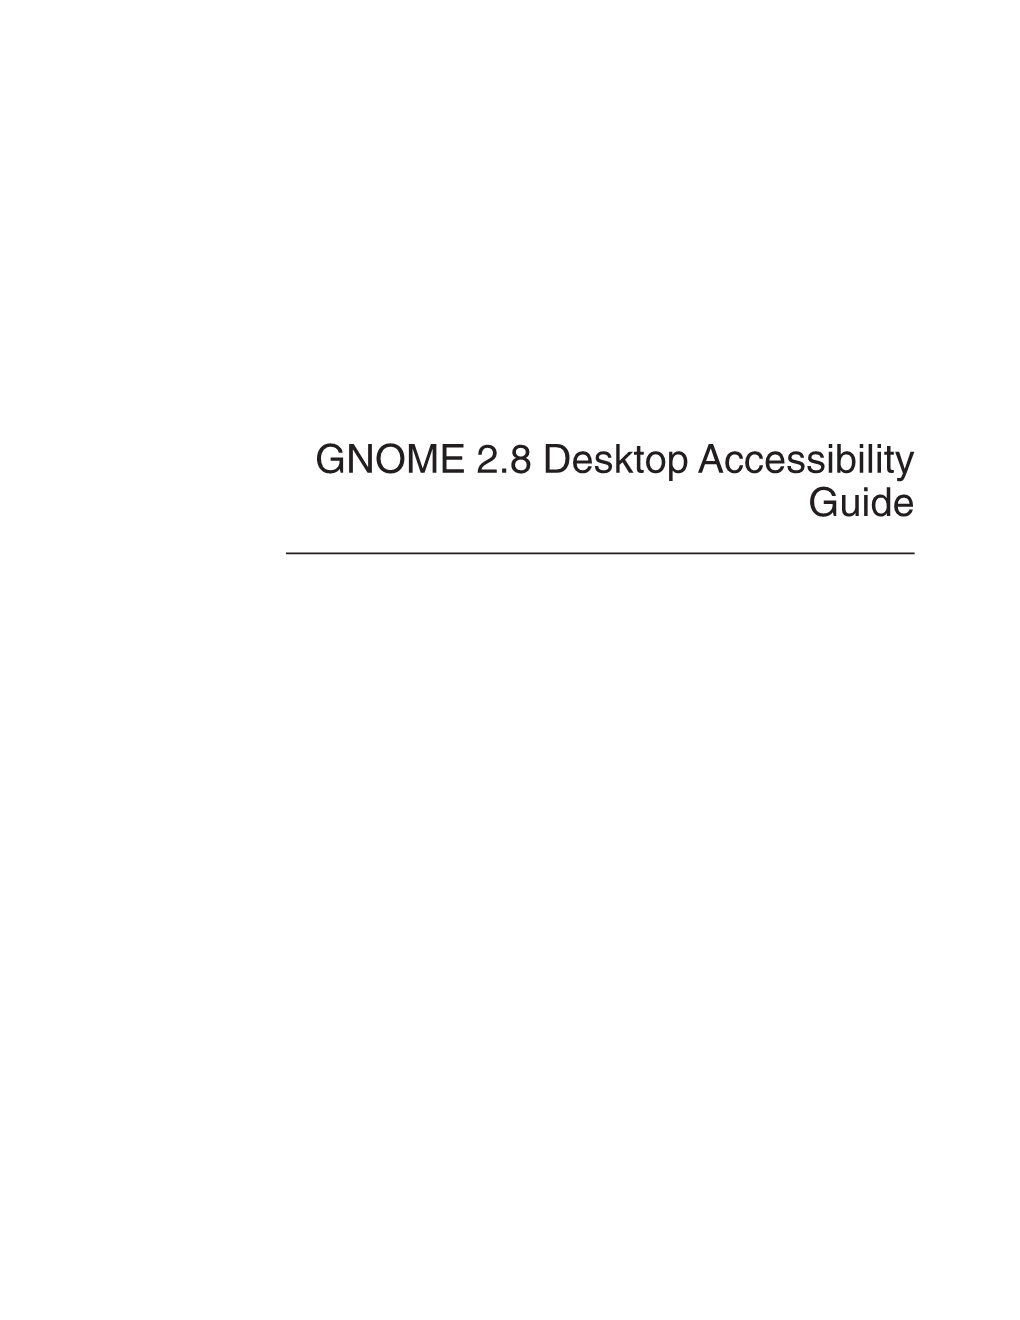 GNOME 2.8 Desktop Accessibility Guide Copyright 2002, 2003, 2004 Sun Microsystems, Inc